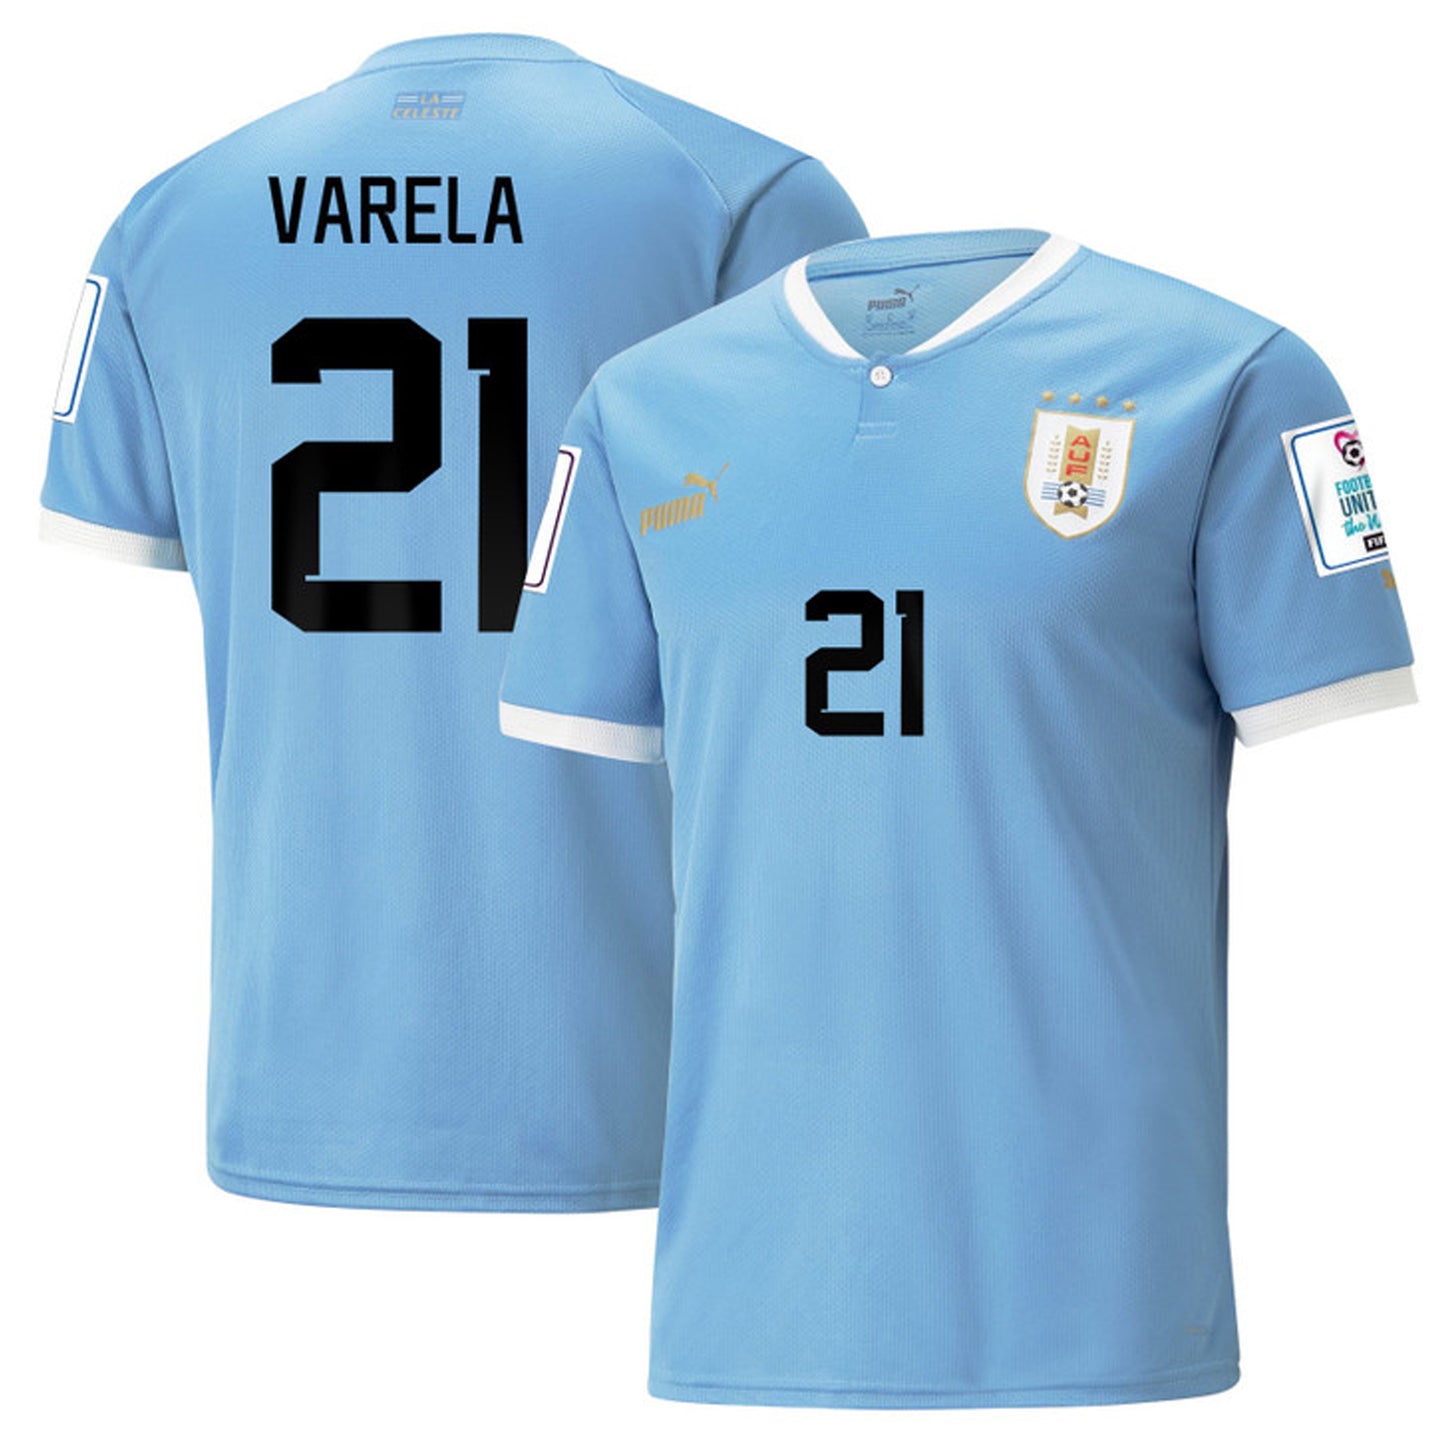 Guillermo Varela Uruguay 21 Fifa World Cup Jersey